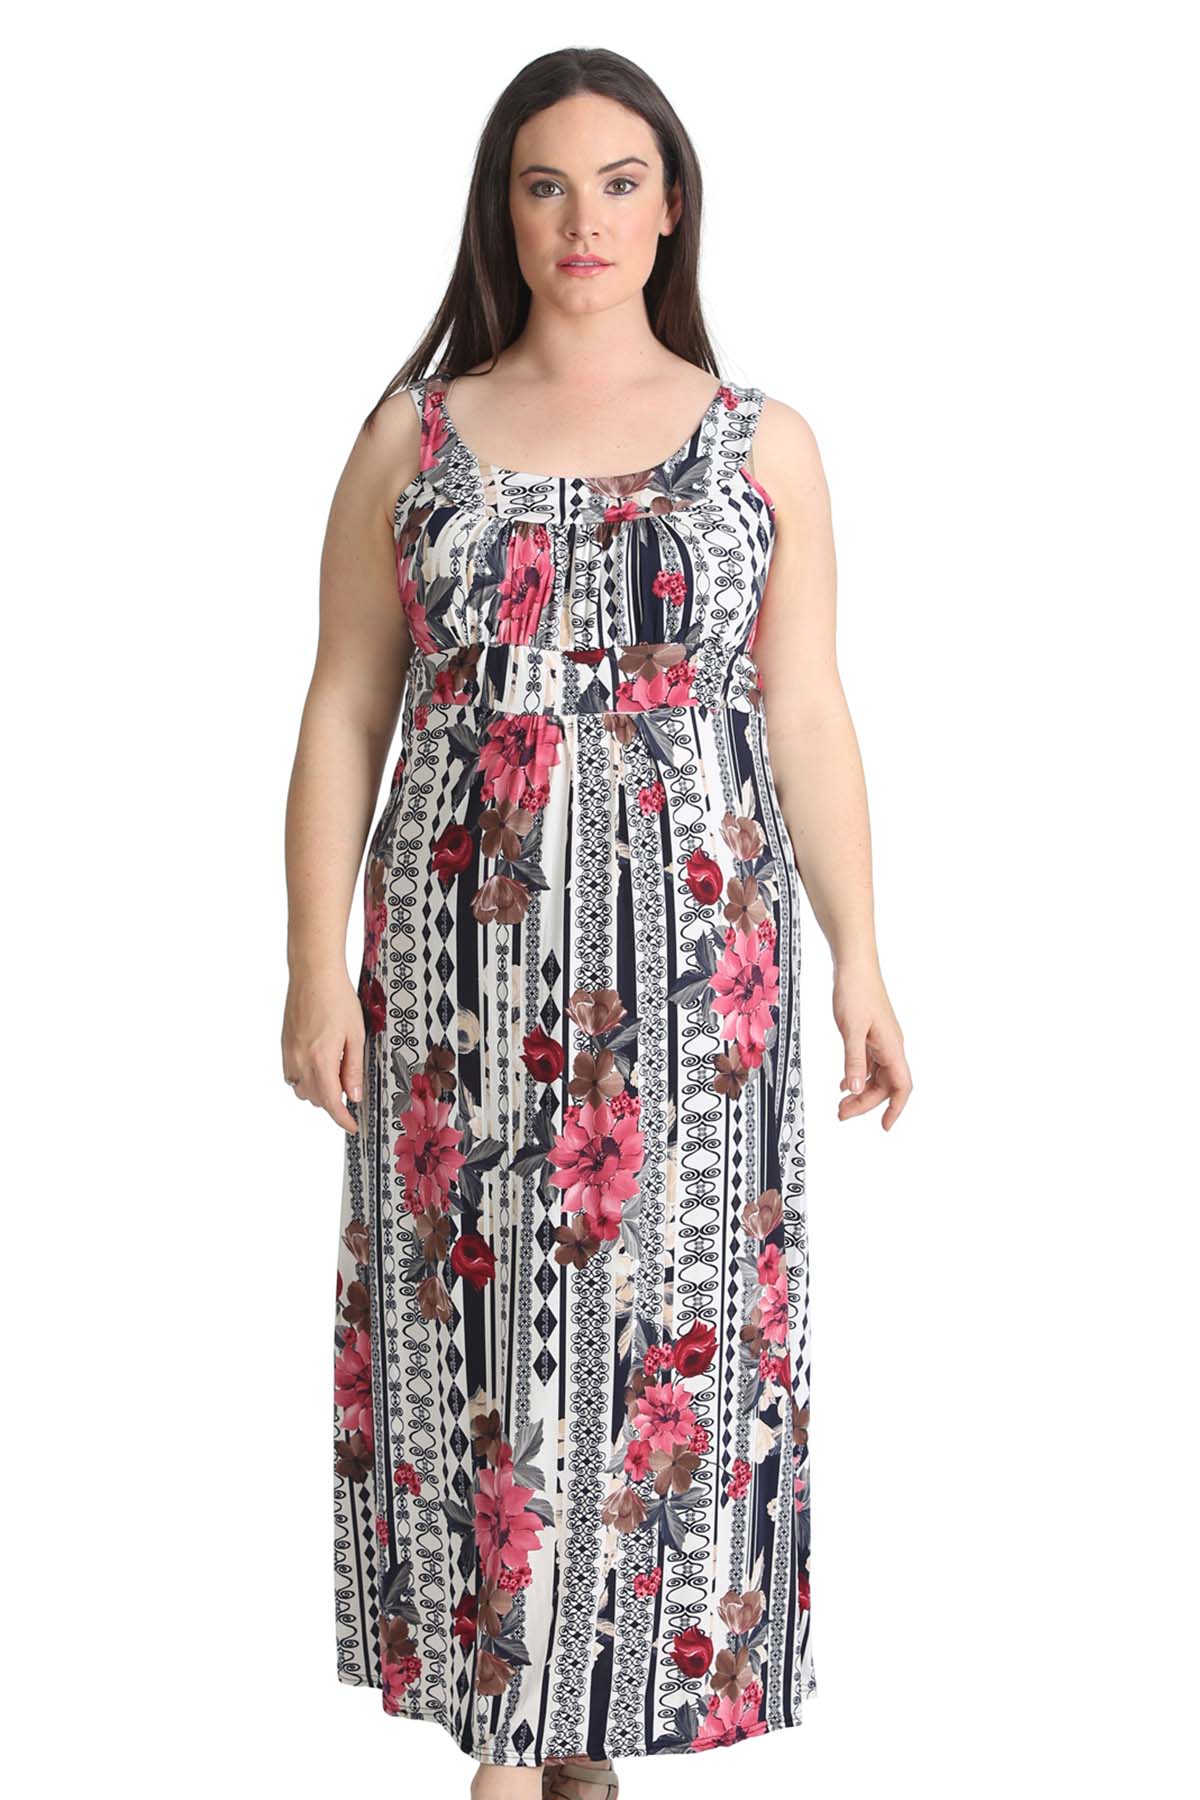 New Ladies Plus Size Maxi Dress Womens Floral Print Full Length Sale Nouvelle Ebay